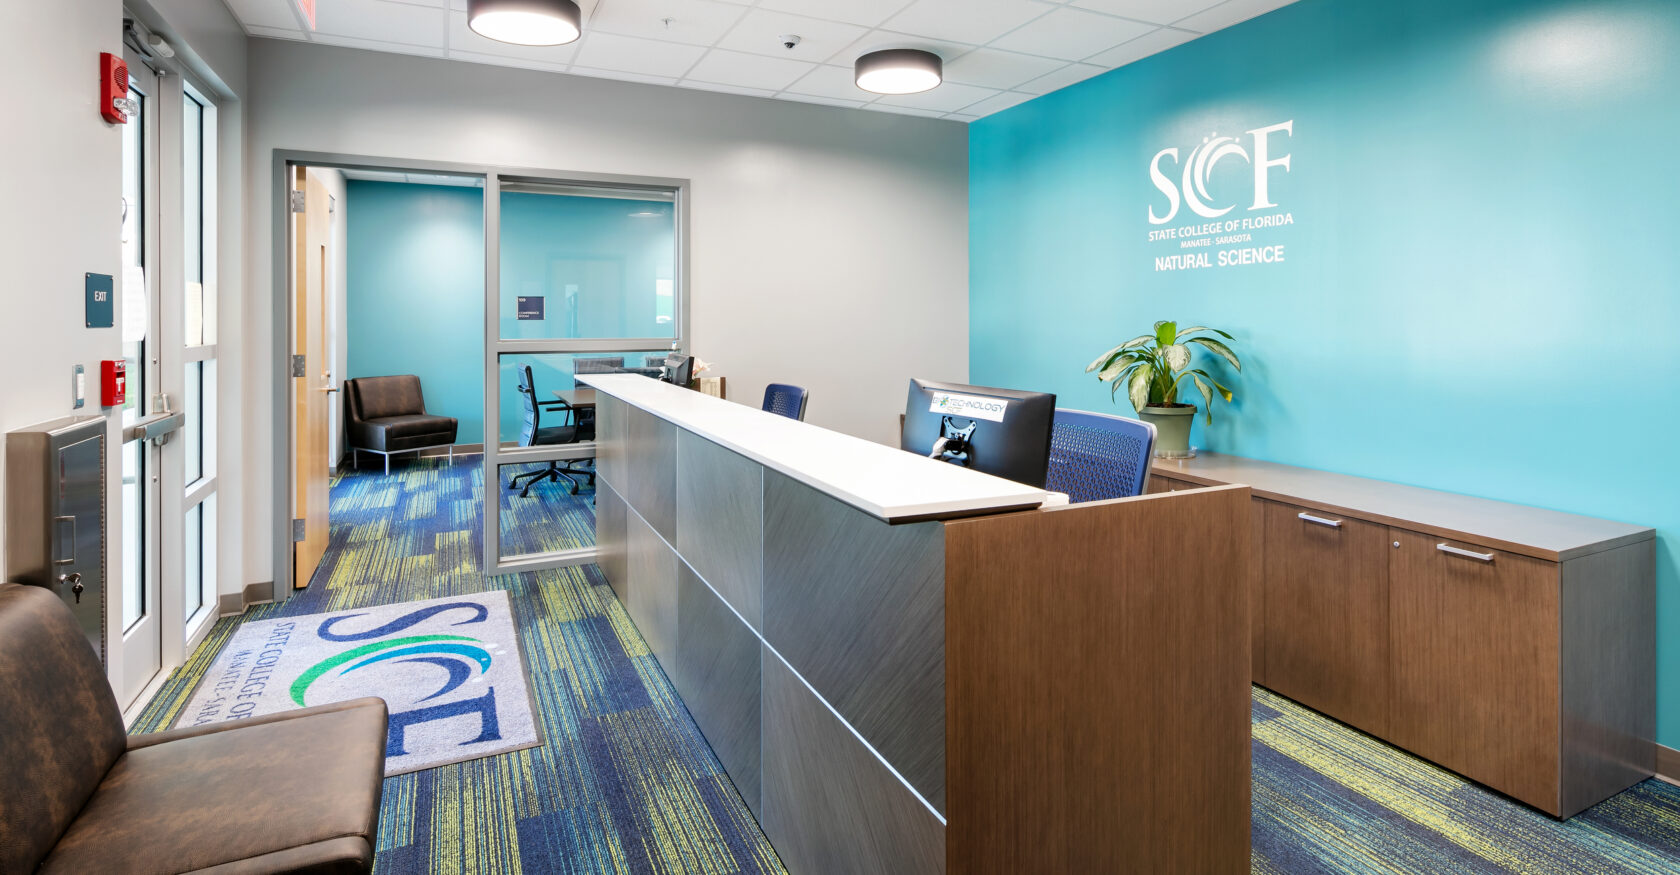 SCF Science building interior front desk image with SCF Science Logo on the back wall behind the desk